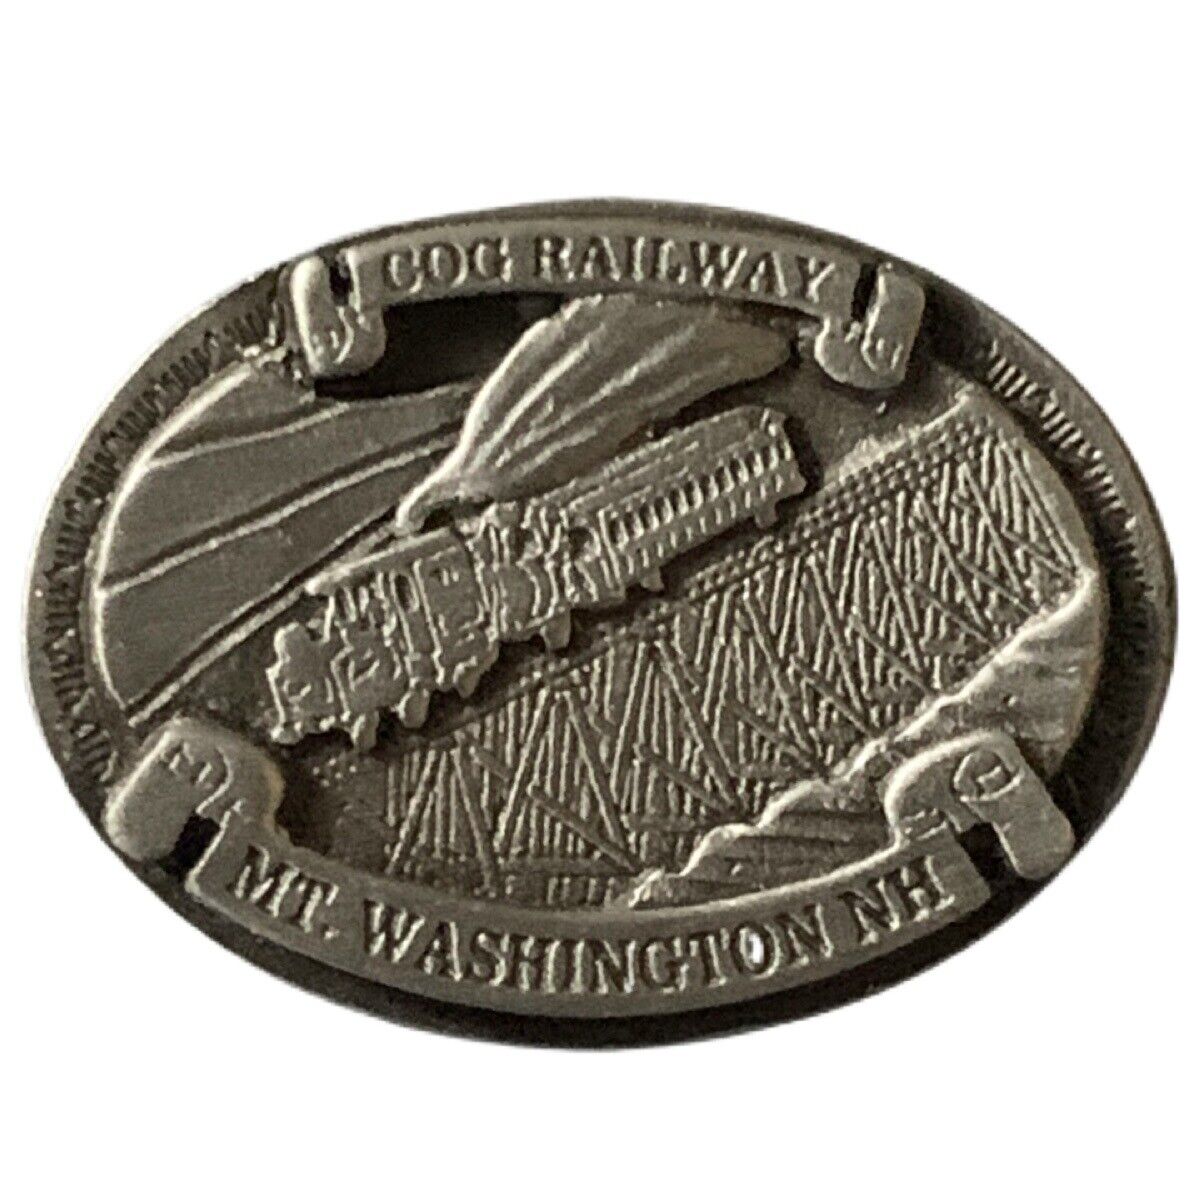 Mount Washington Cog Railway New Hampshire Solid Pewter Travel Souvenir Pin